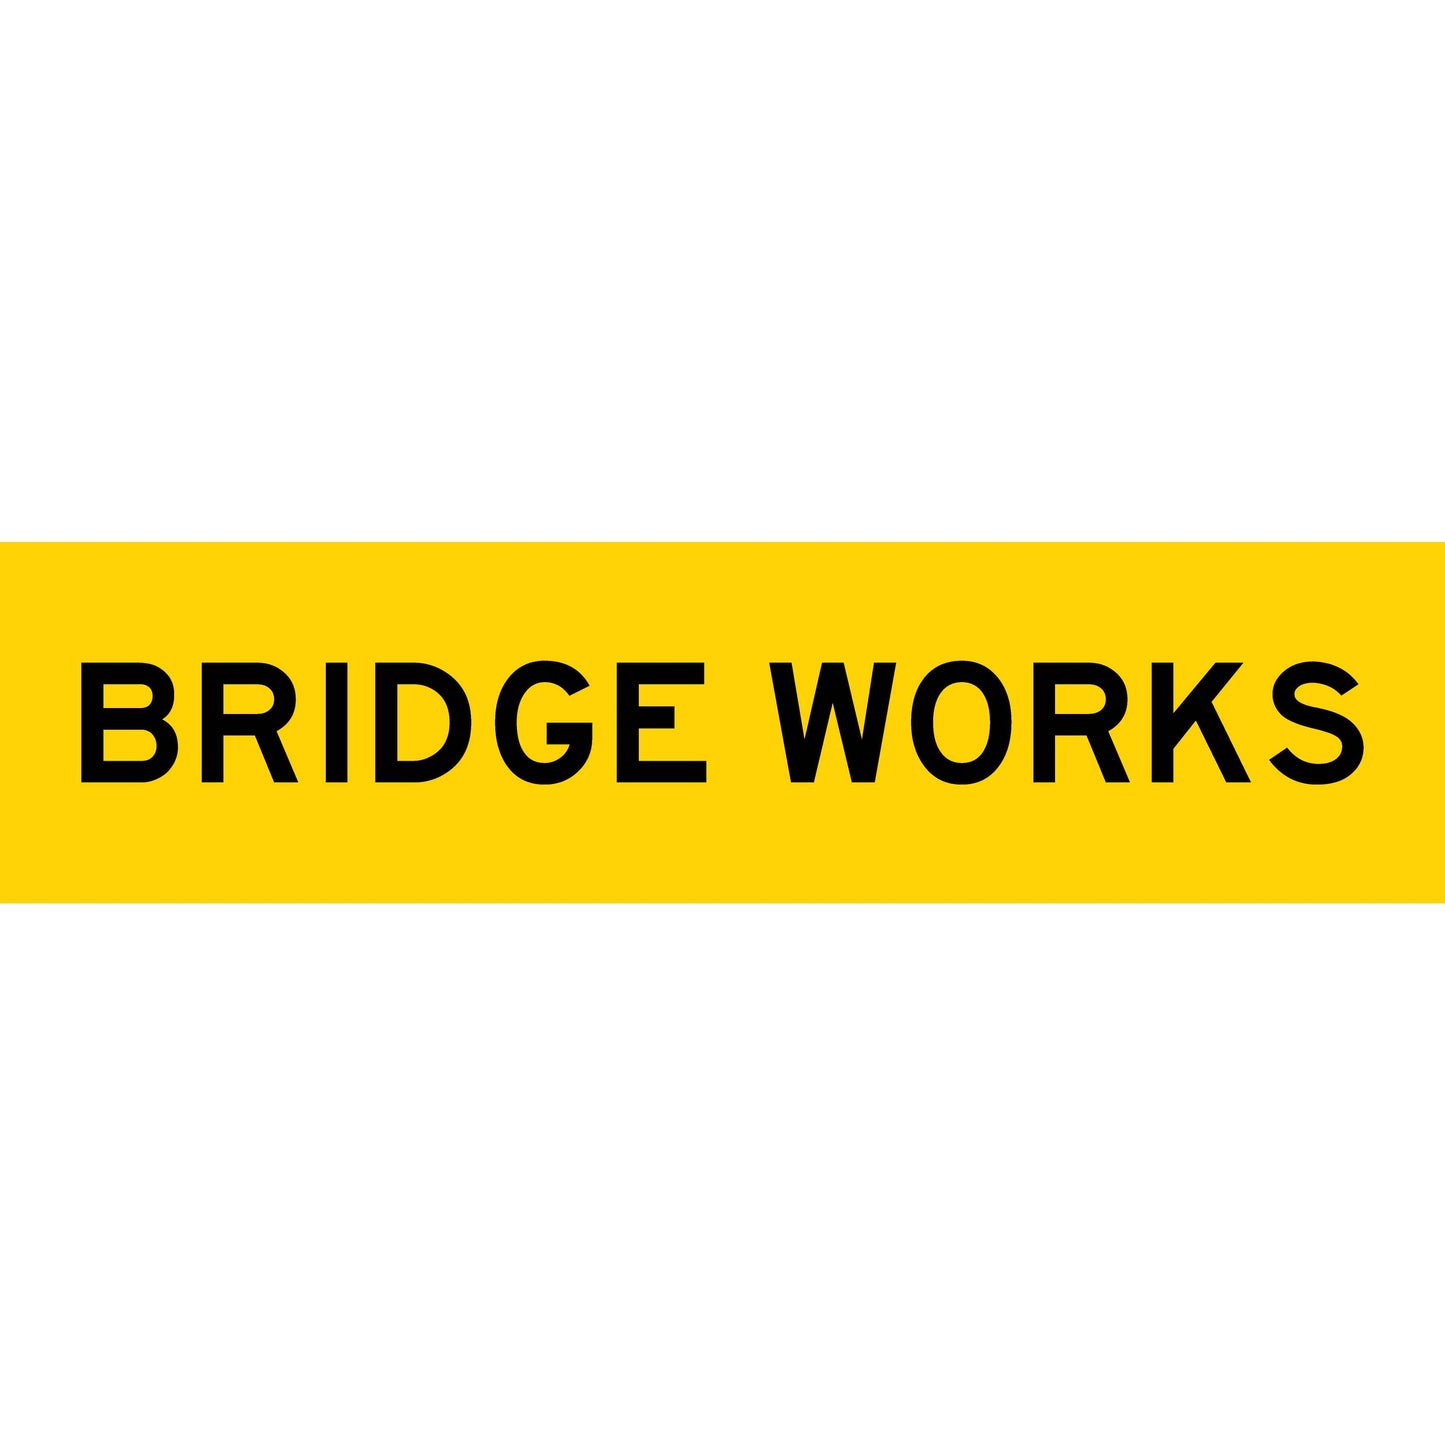 Bridge Works Multi Message Traffic Sign